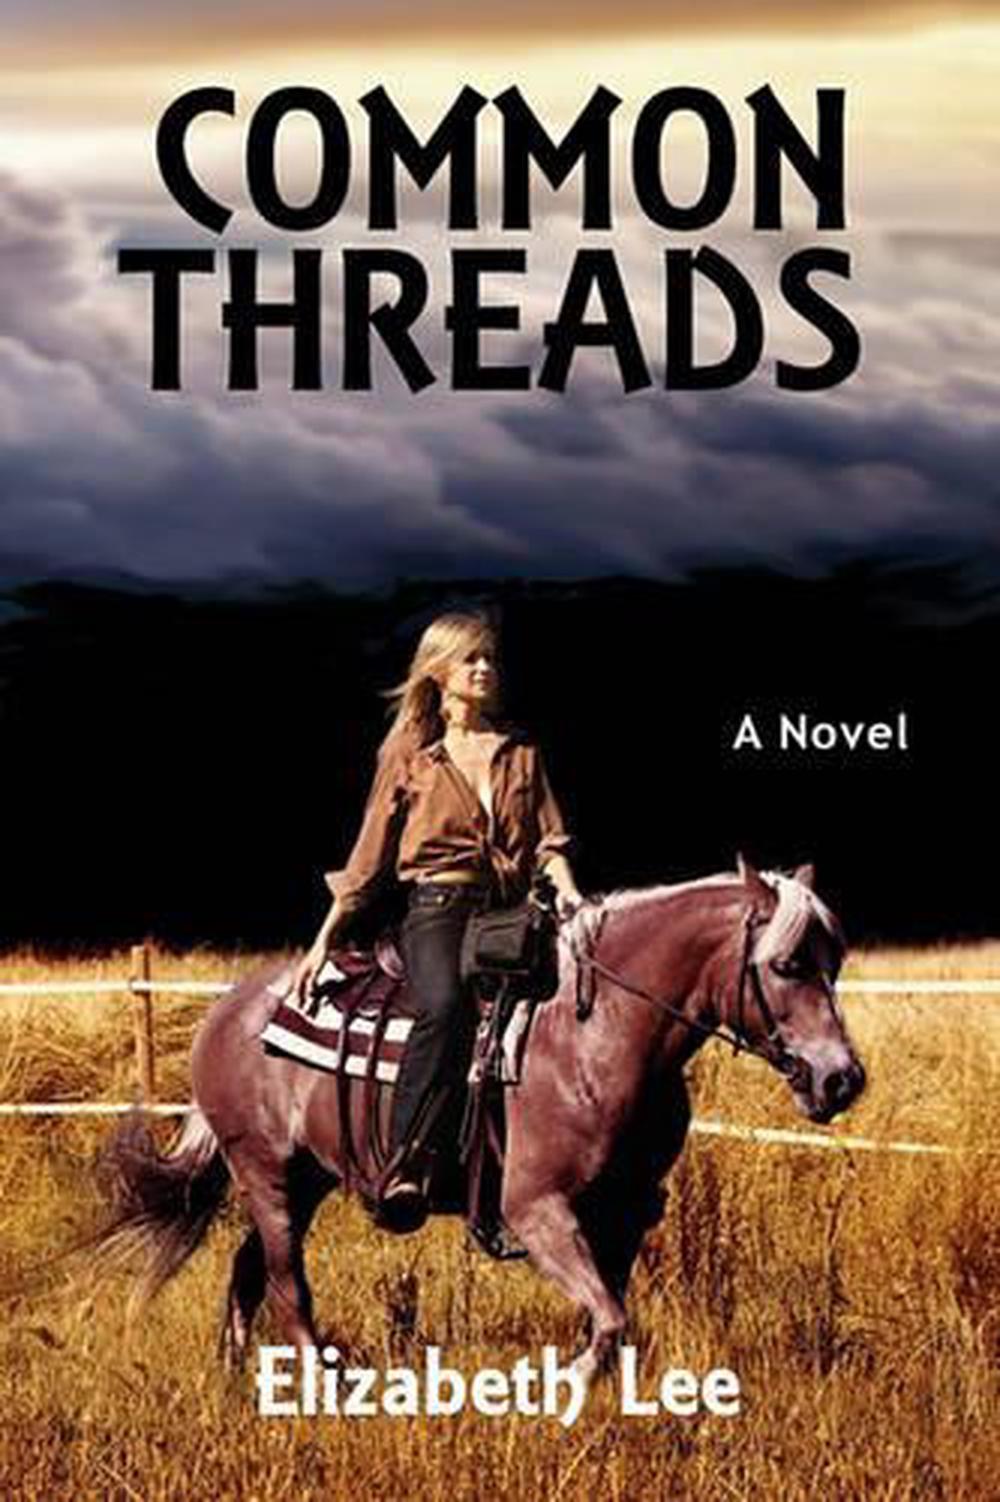 Thread of Revenge by Elizabeth Goddard